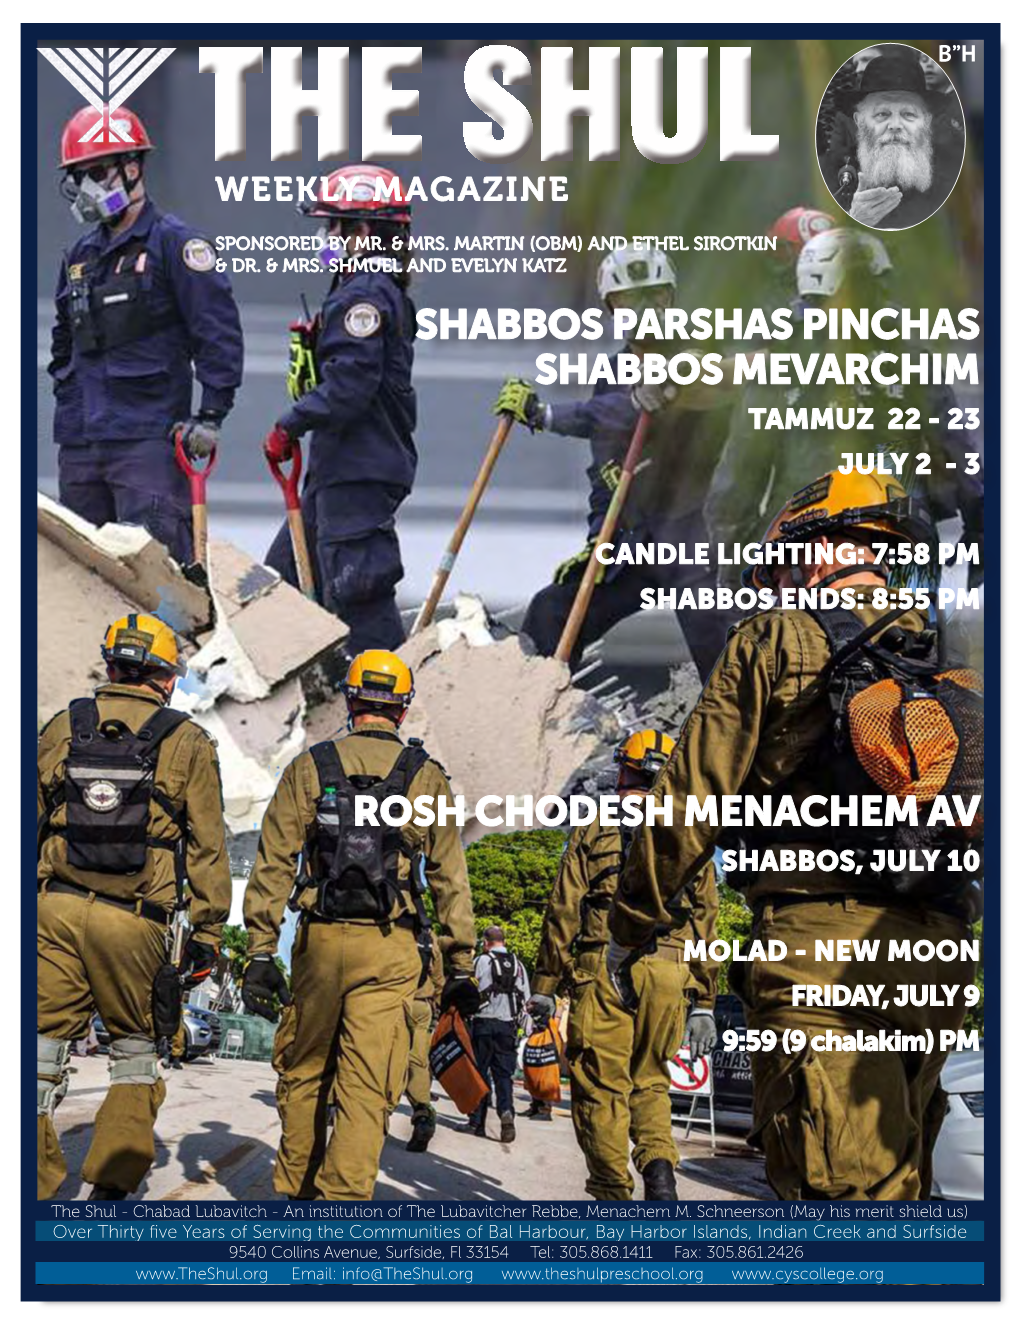 Shabbos Parshas Pinchas Shabbos Mevarchim Tammuz 22 - 23 July 2 - 3